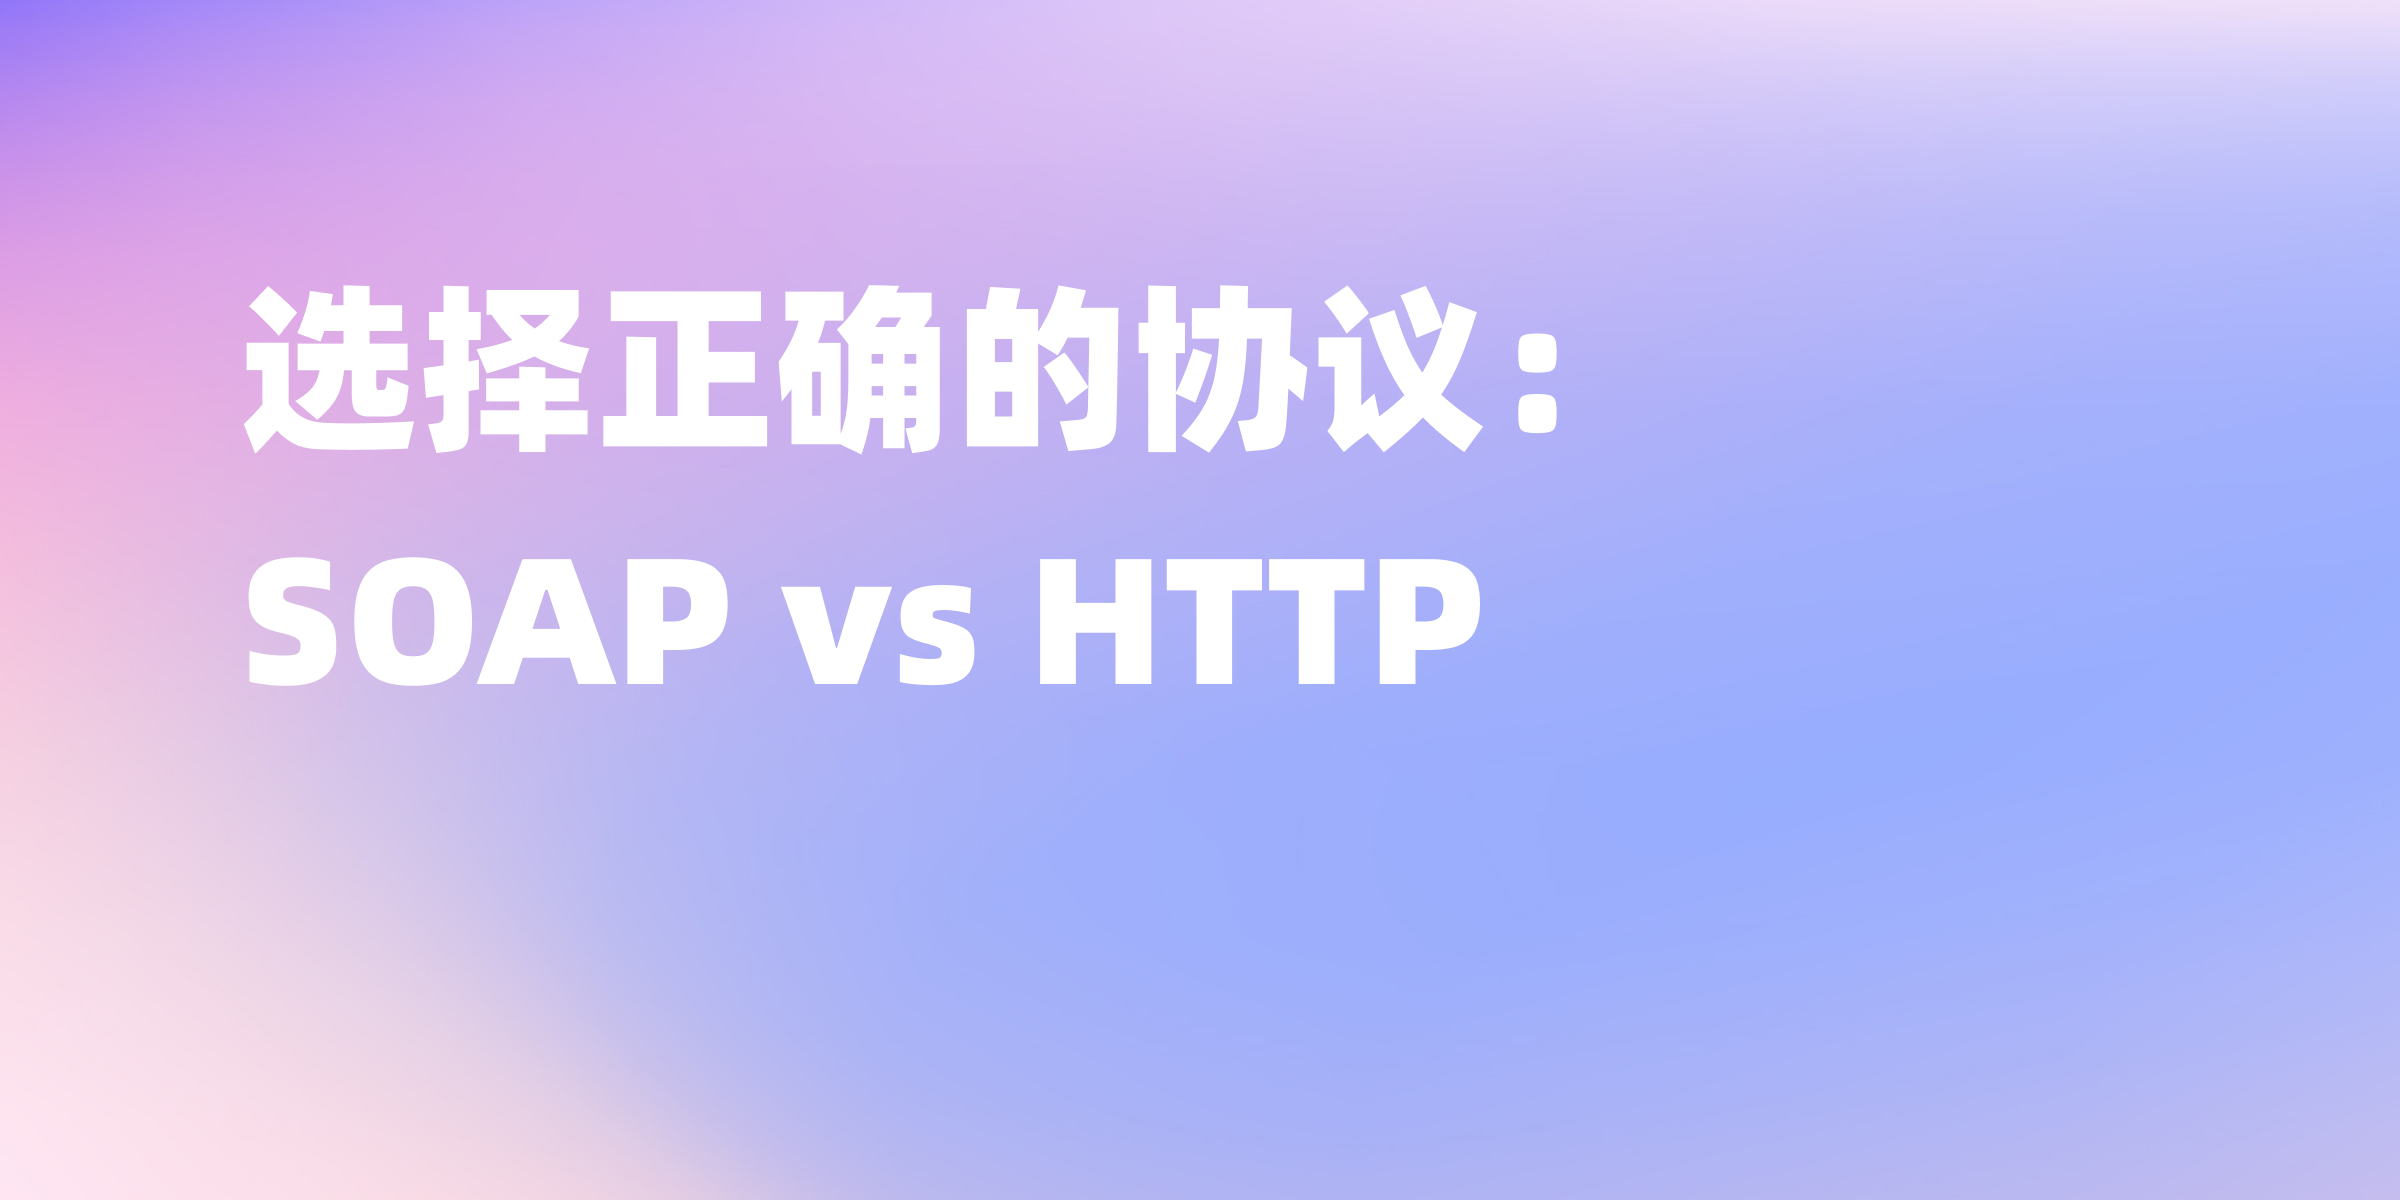 SOAP 协议和 HTTP 协议